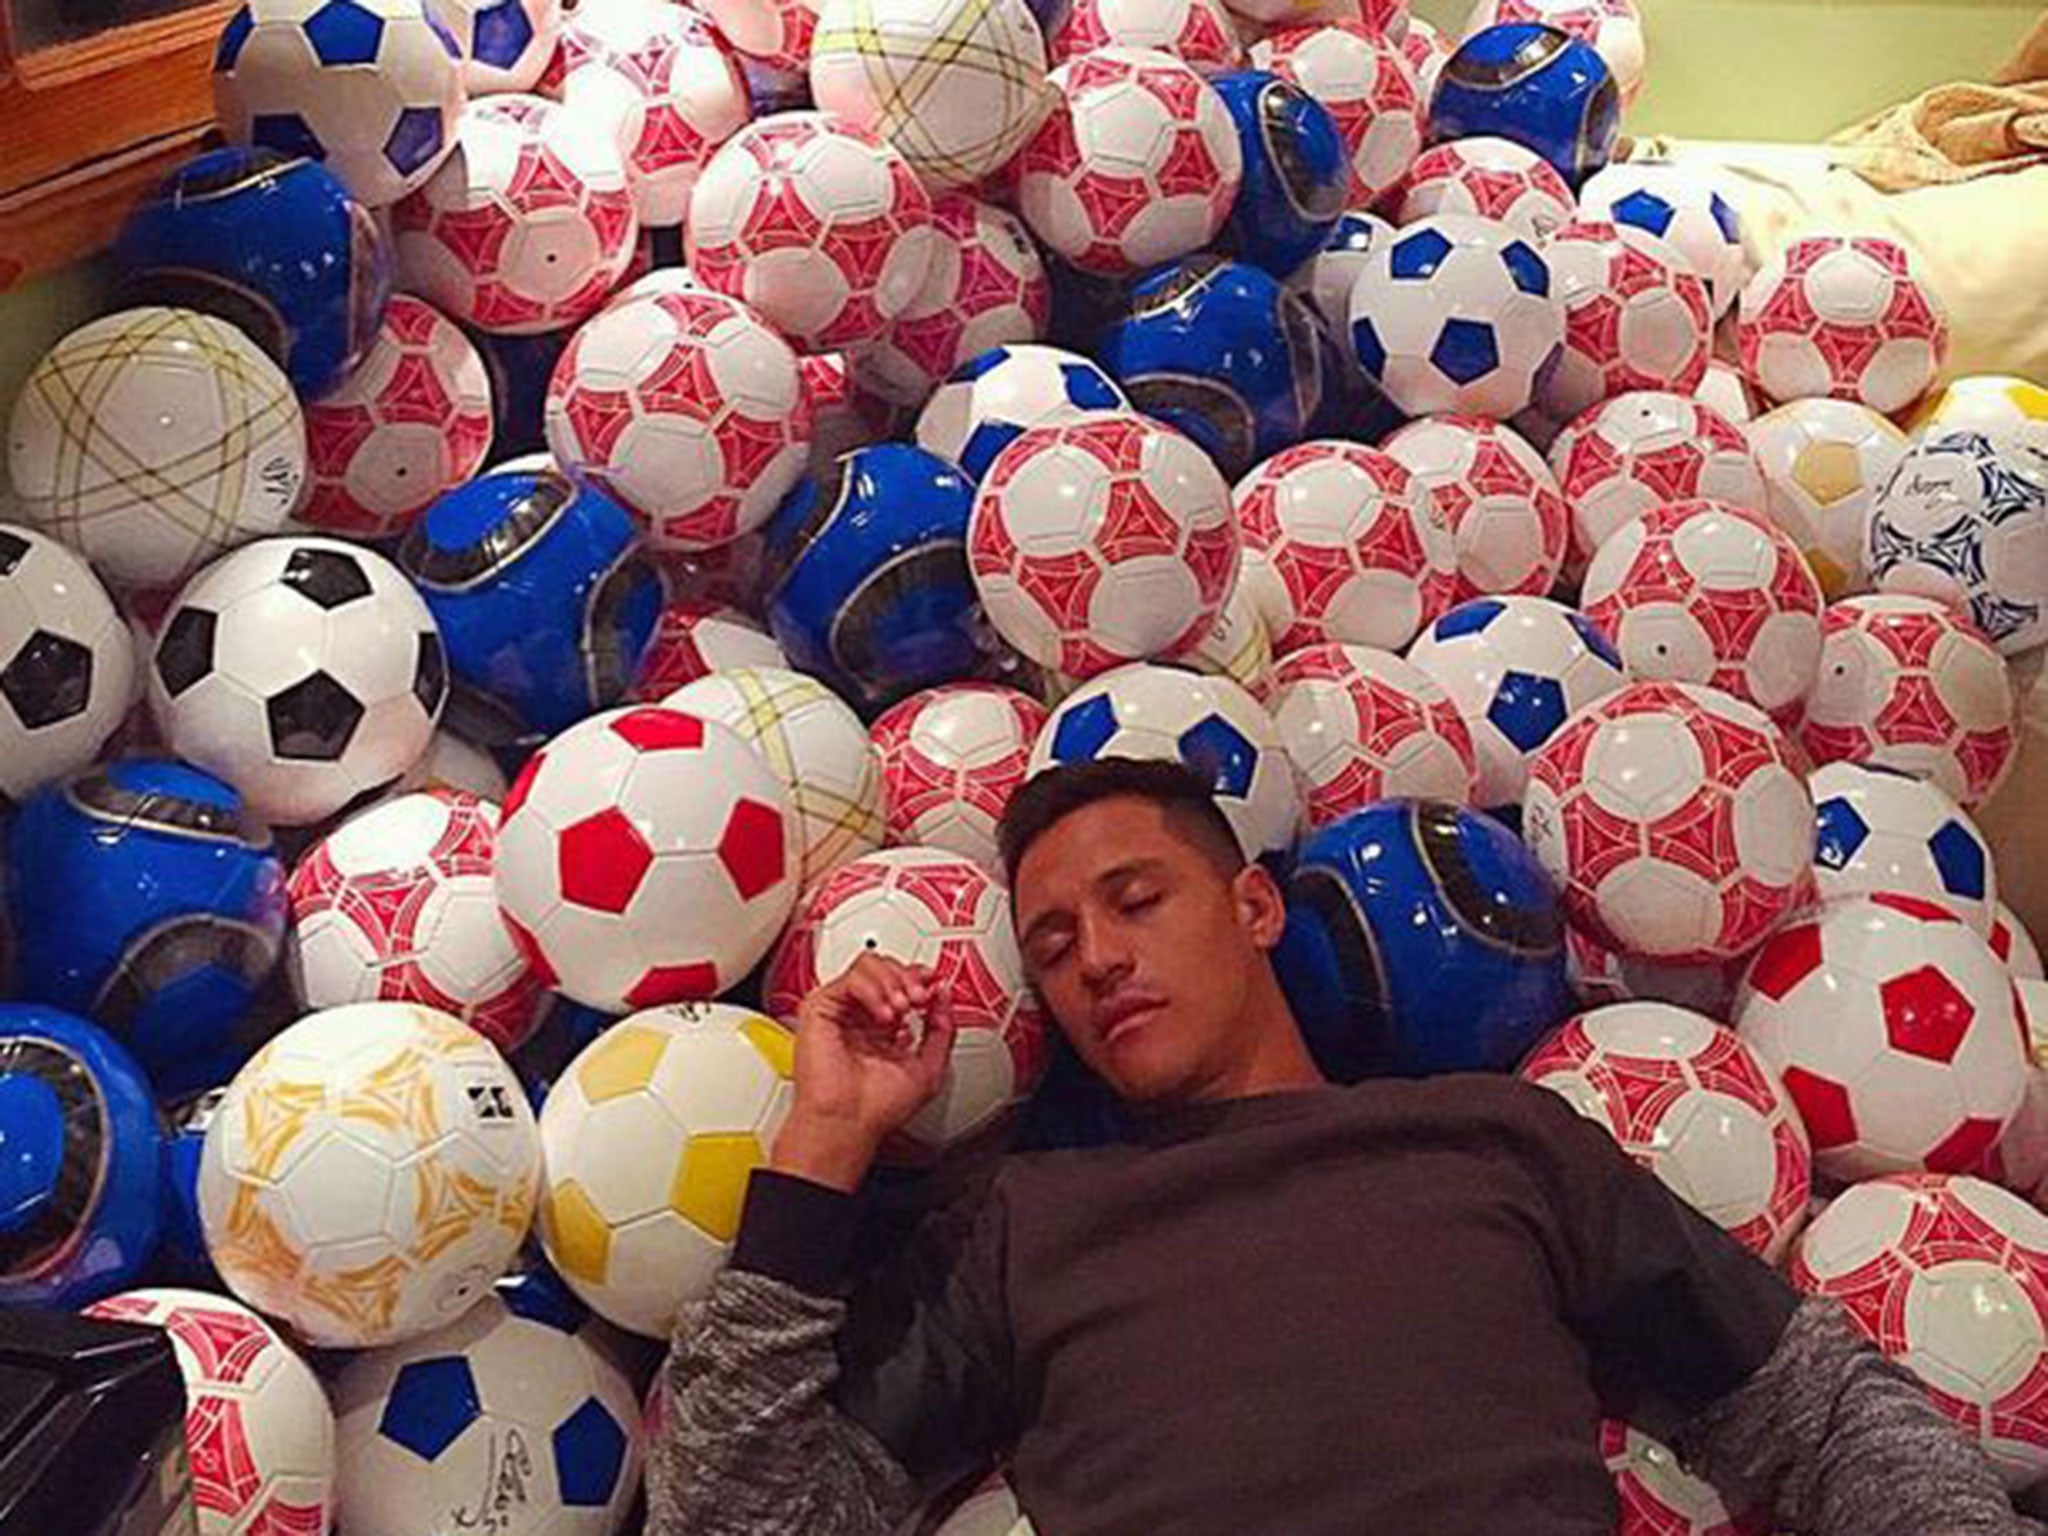 Alexis Sanchez sleeping on the signed footballs